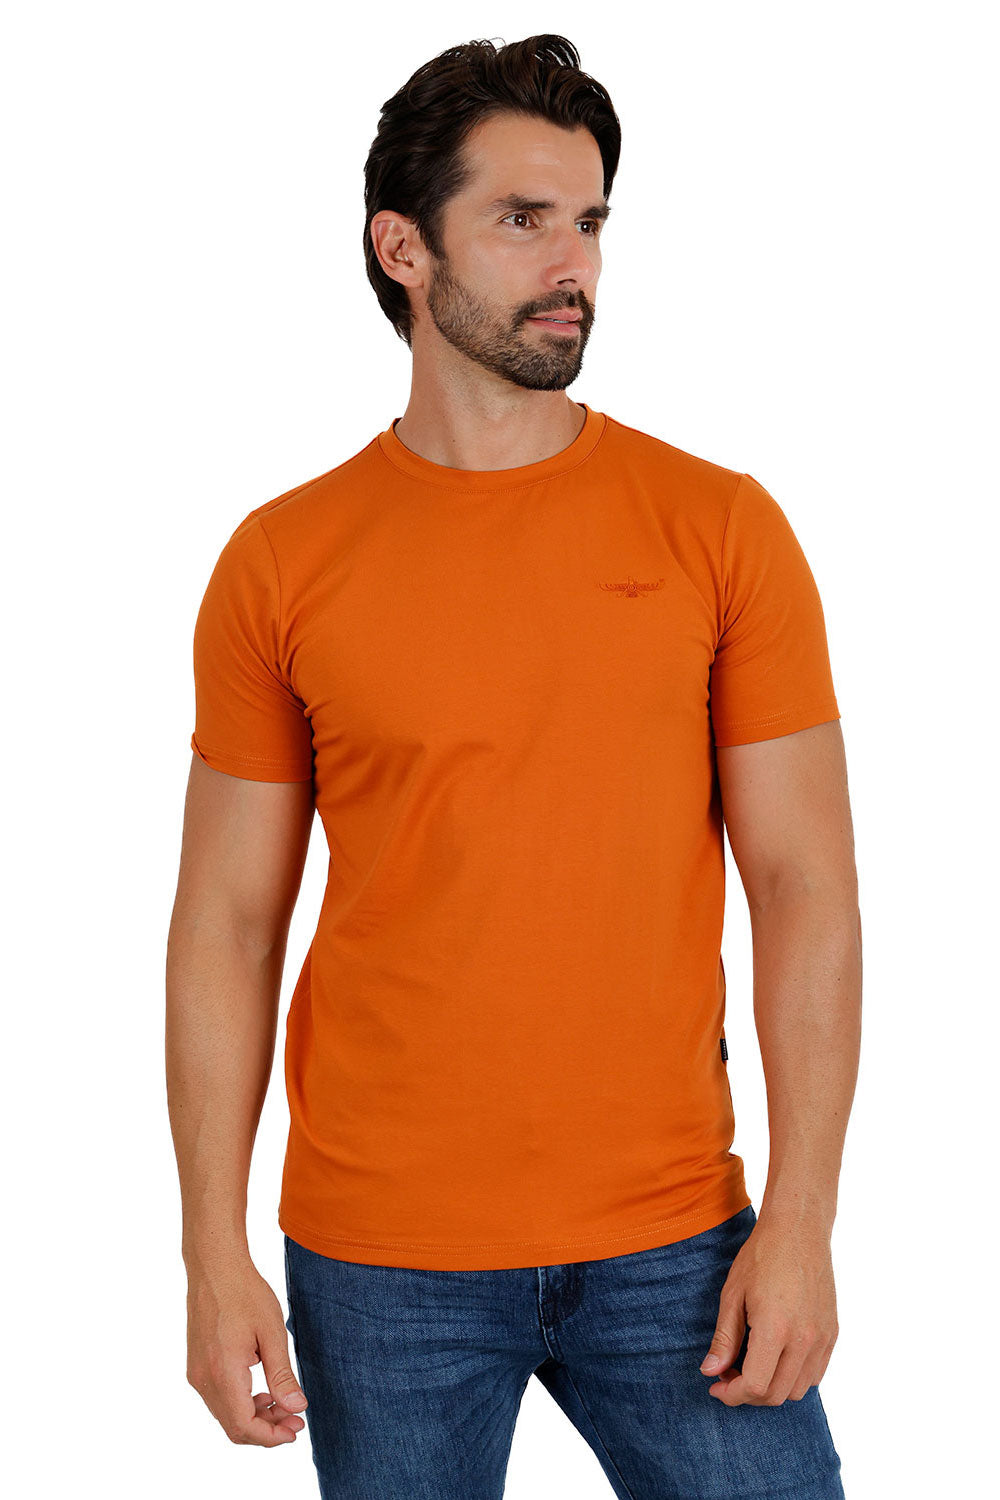 BARABAS Men's Basic Solid Color Crew-neck T-shirts ST933 Rust